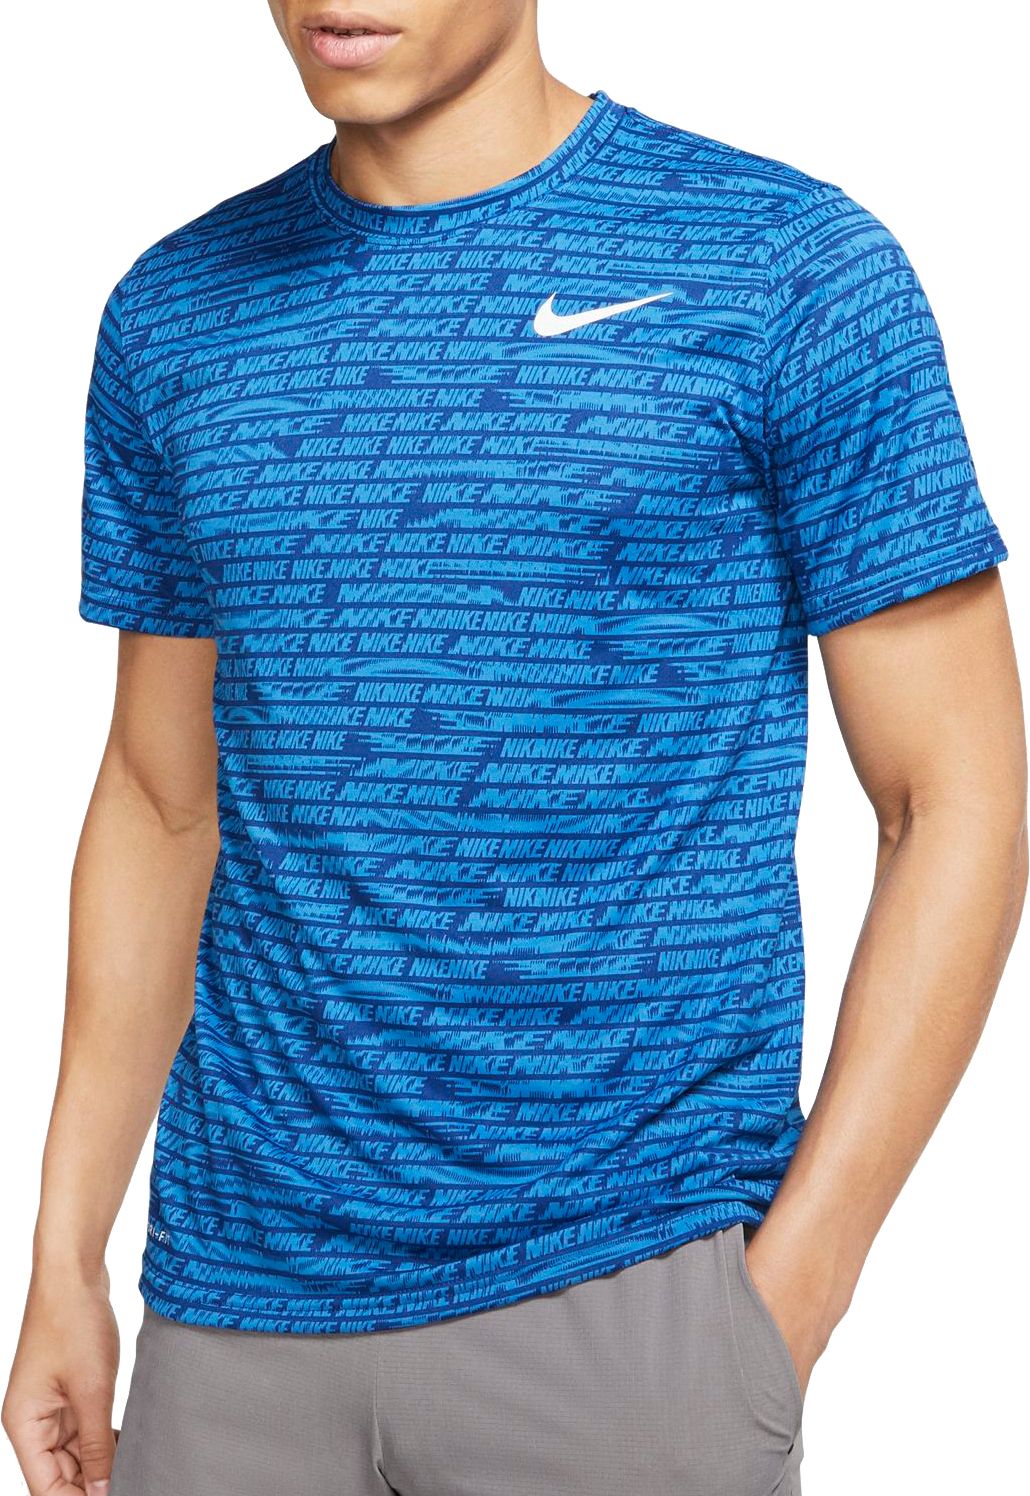 Nike Men's Training T-Shirt (Regular and Big & Tall) - .97